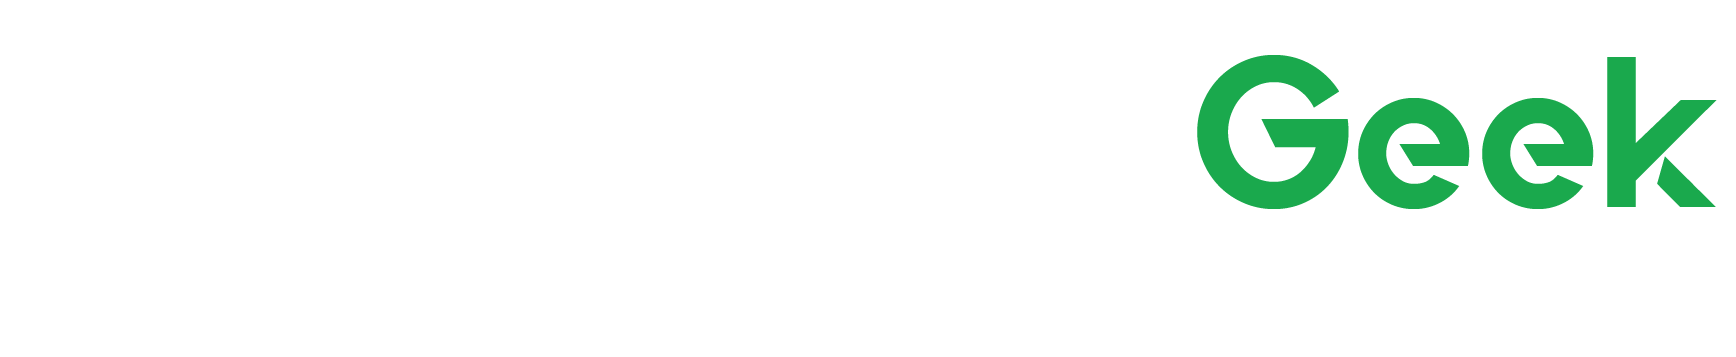 TechnoGeek Services